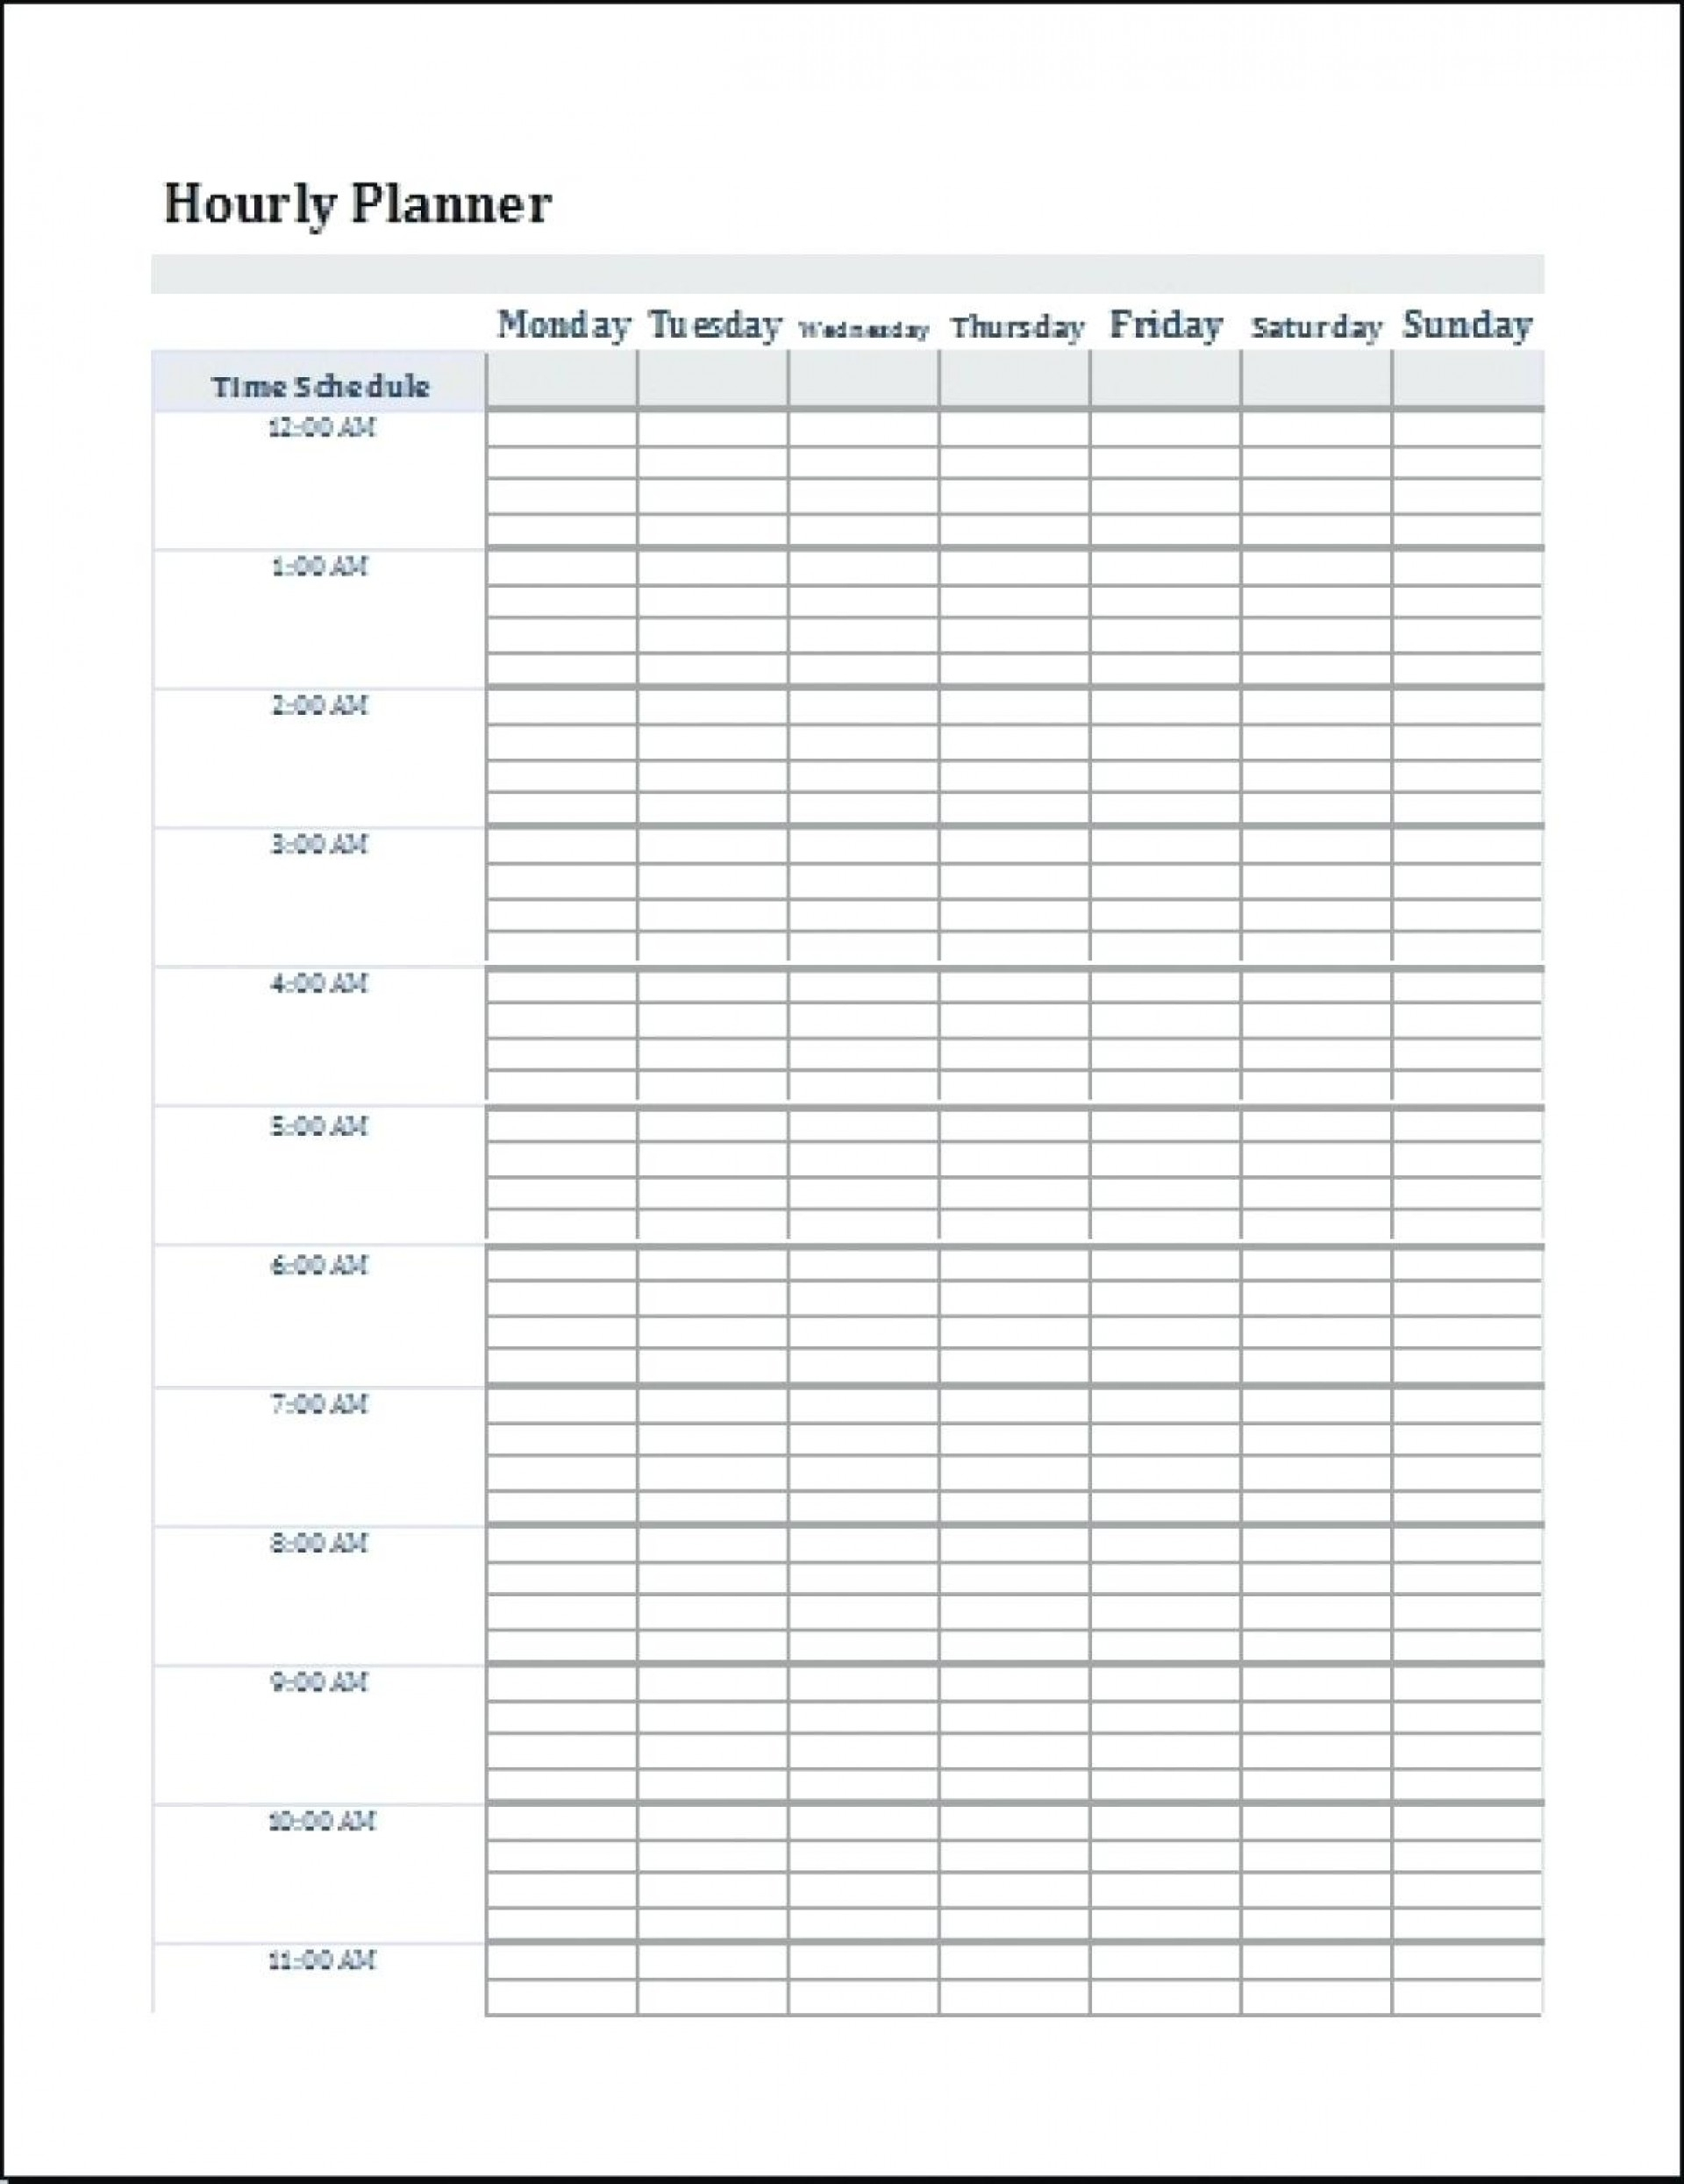 010 Template Ideas Weekly Hourly Schedule Calendar Excel